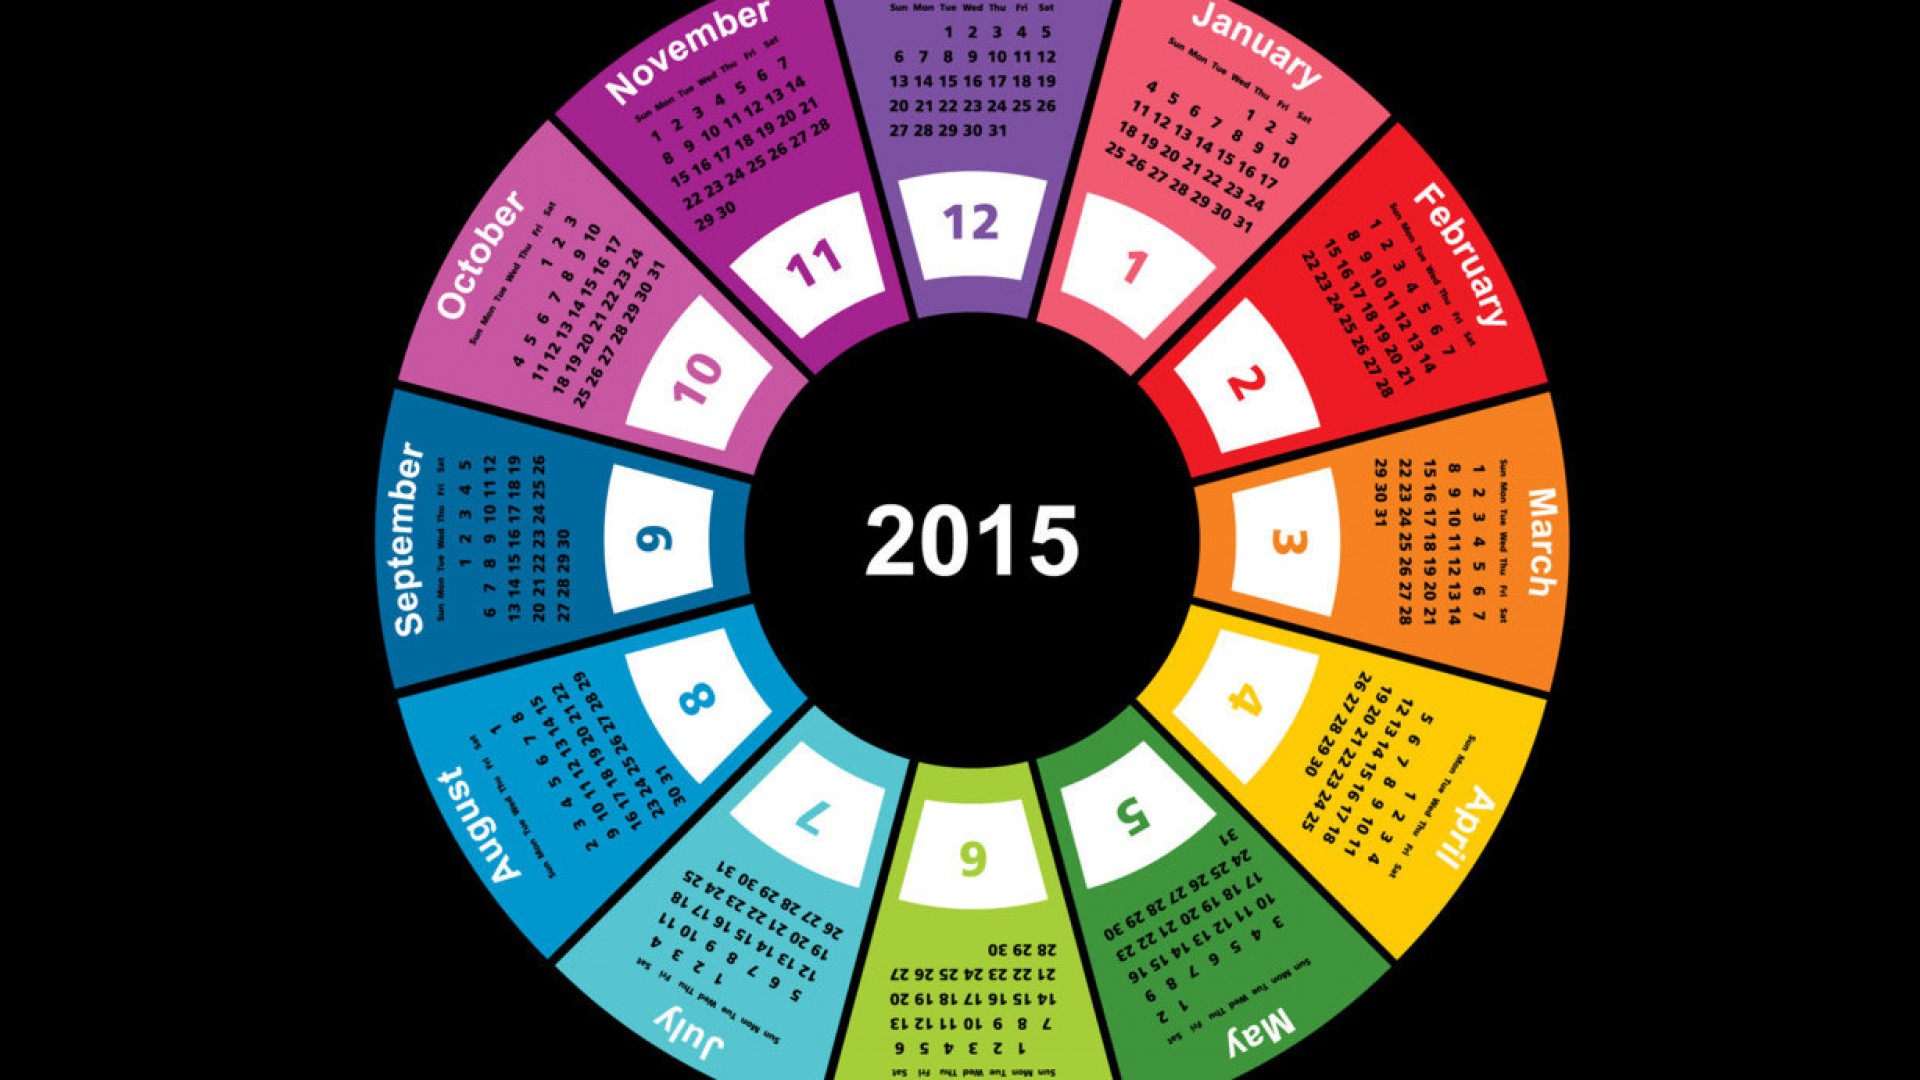 2015 Year Calendar Wallpaper Download Free 2015 Calendar by Month